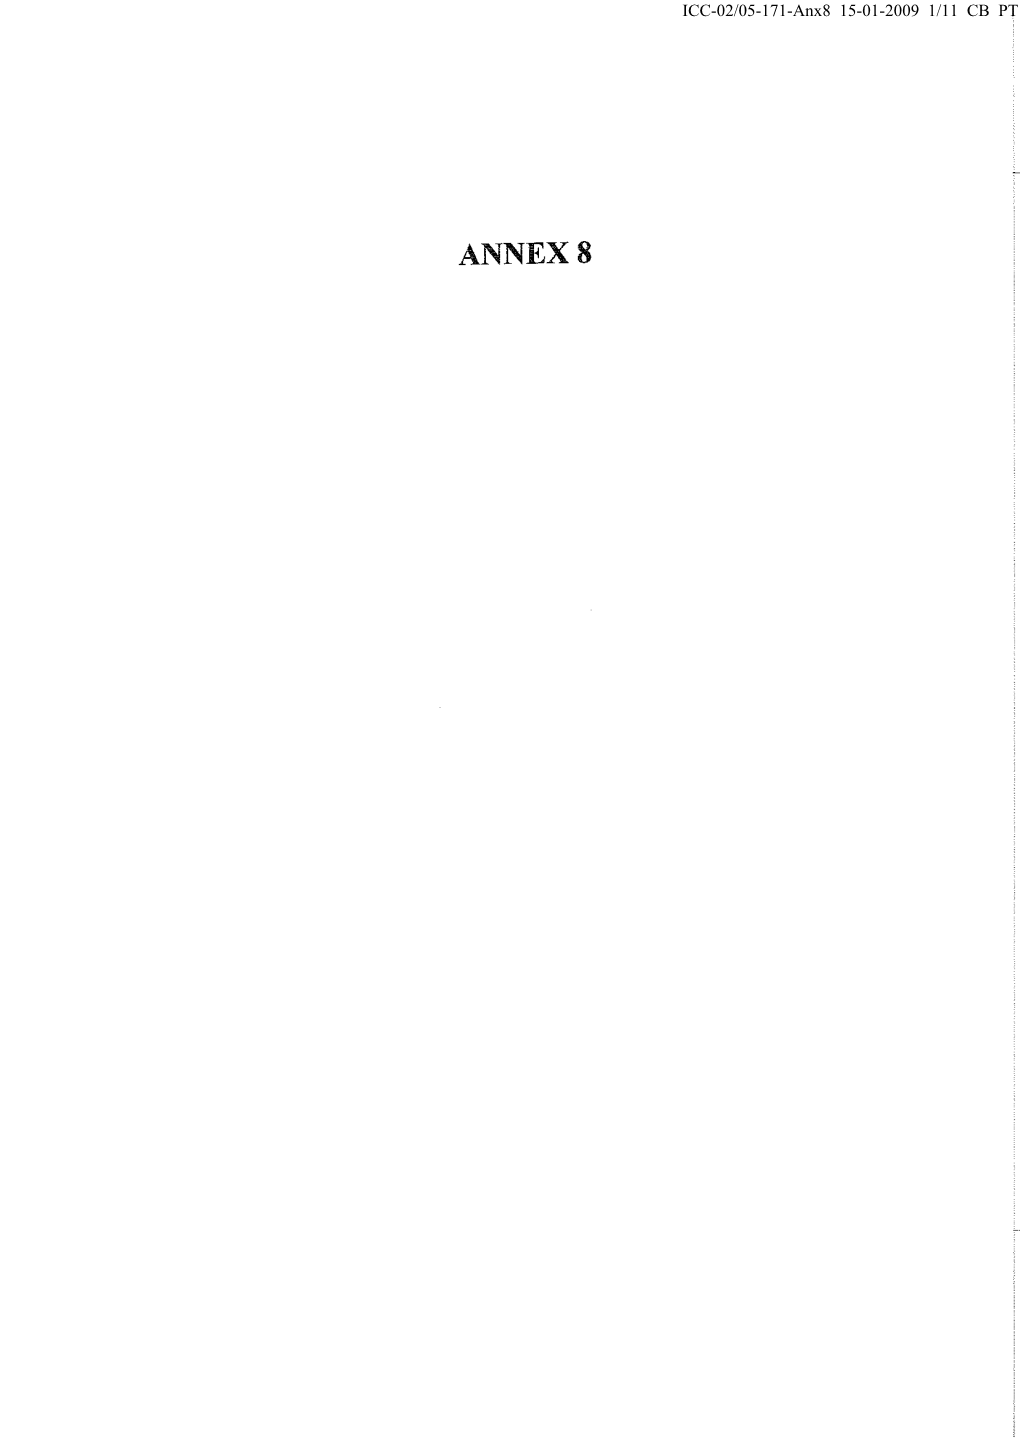 ANNEX8 ICC-02/05-171-Anx8 15-01-2009 2/11 CB PT